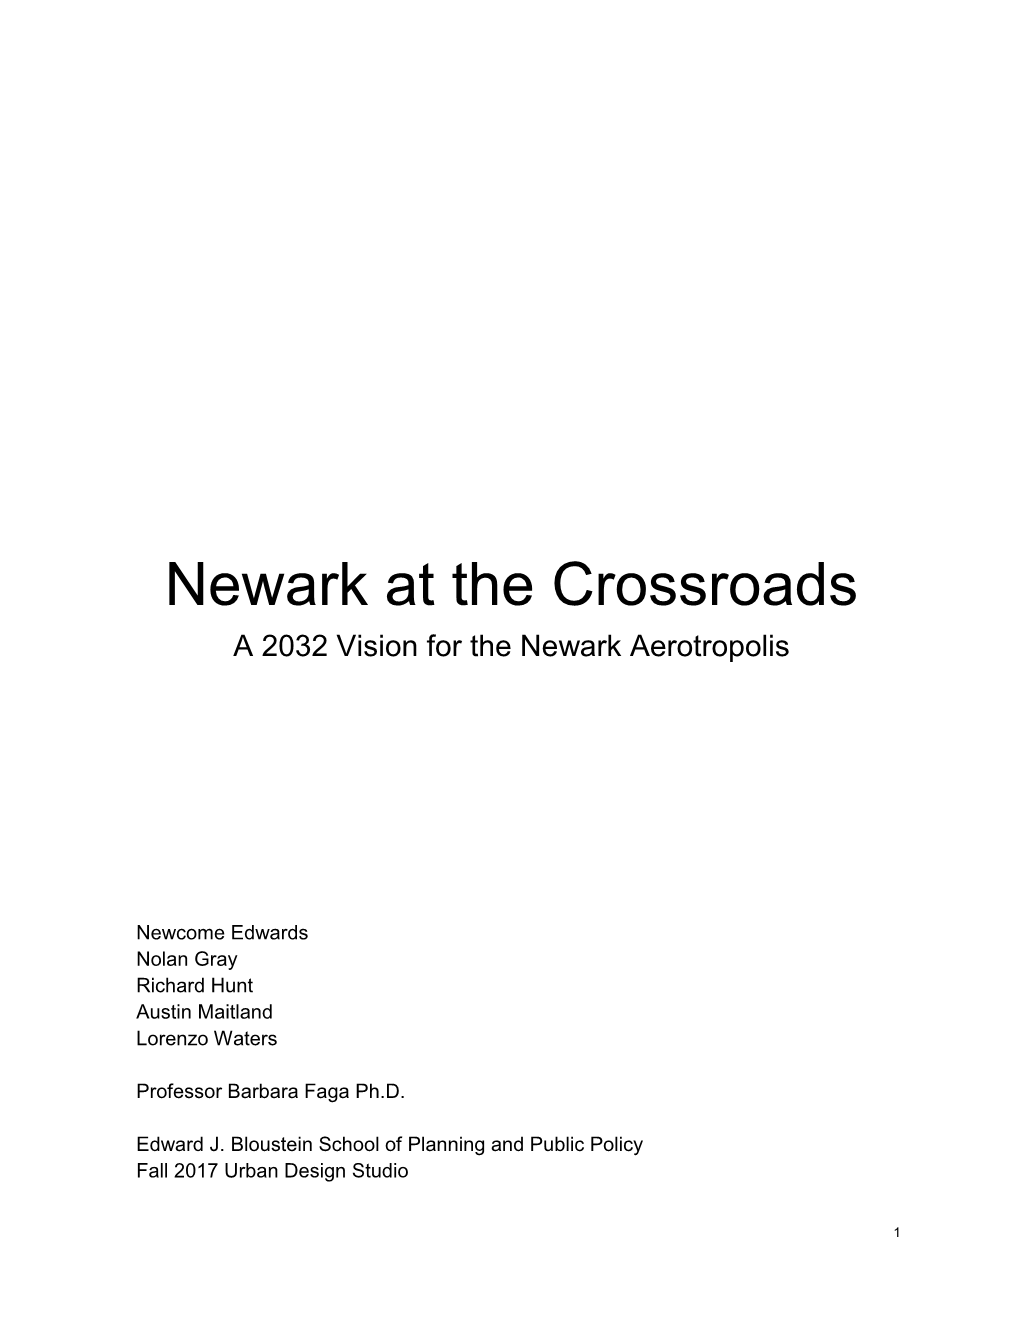 Newark at the Crossroads a 2032 Vision for the Newark Aerotropolis